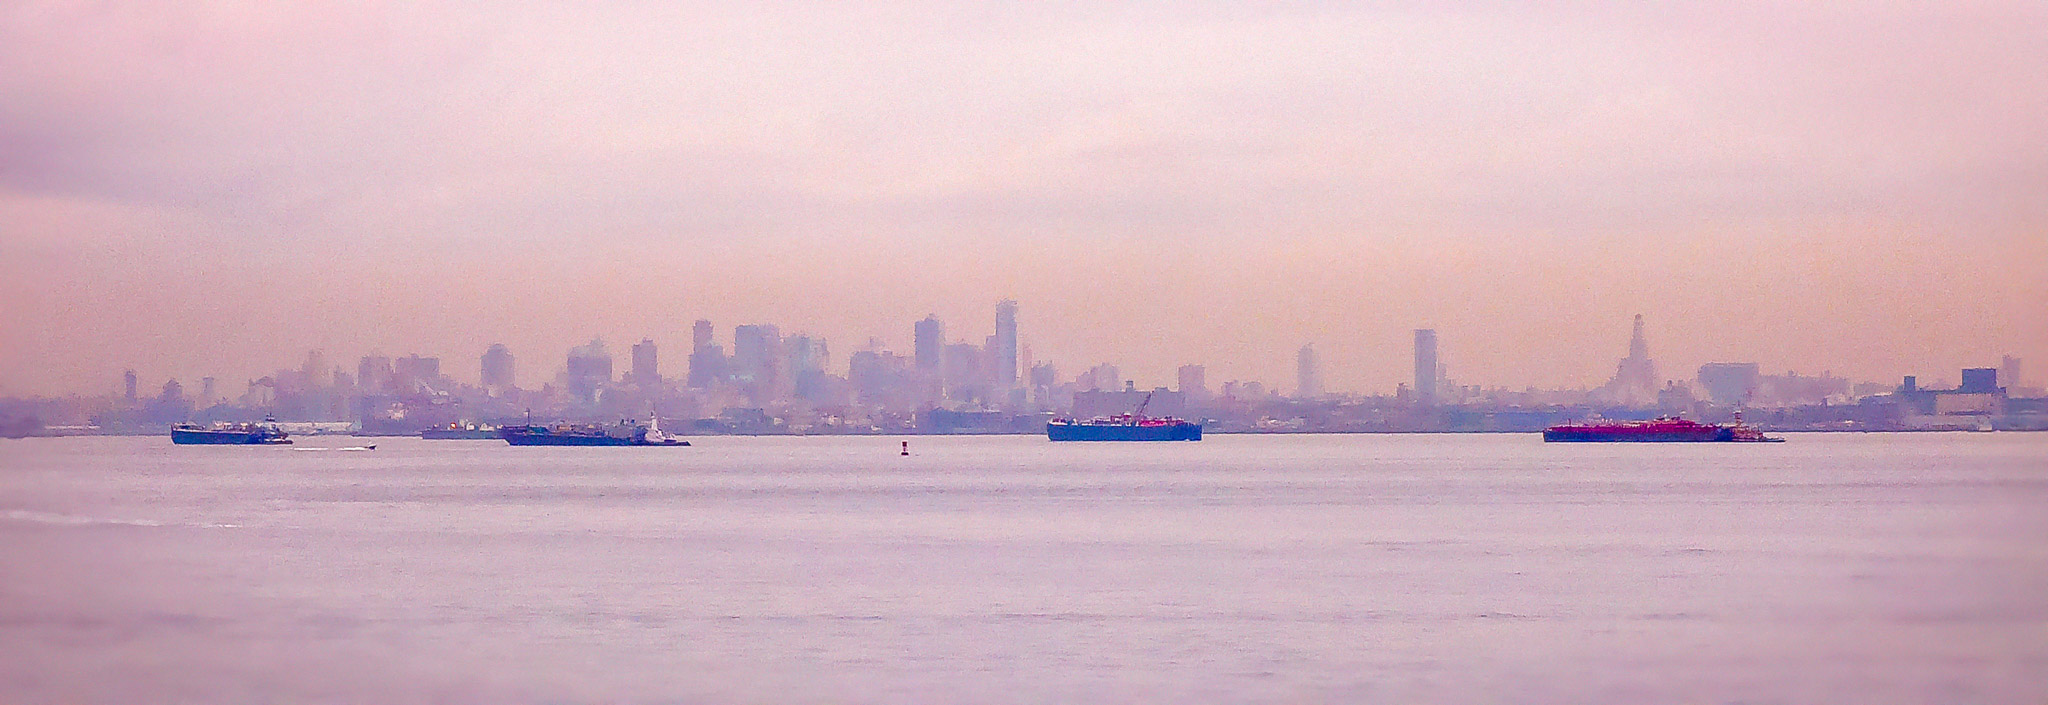 Evening view of New York skyline